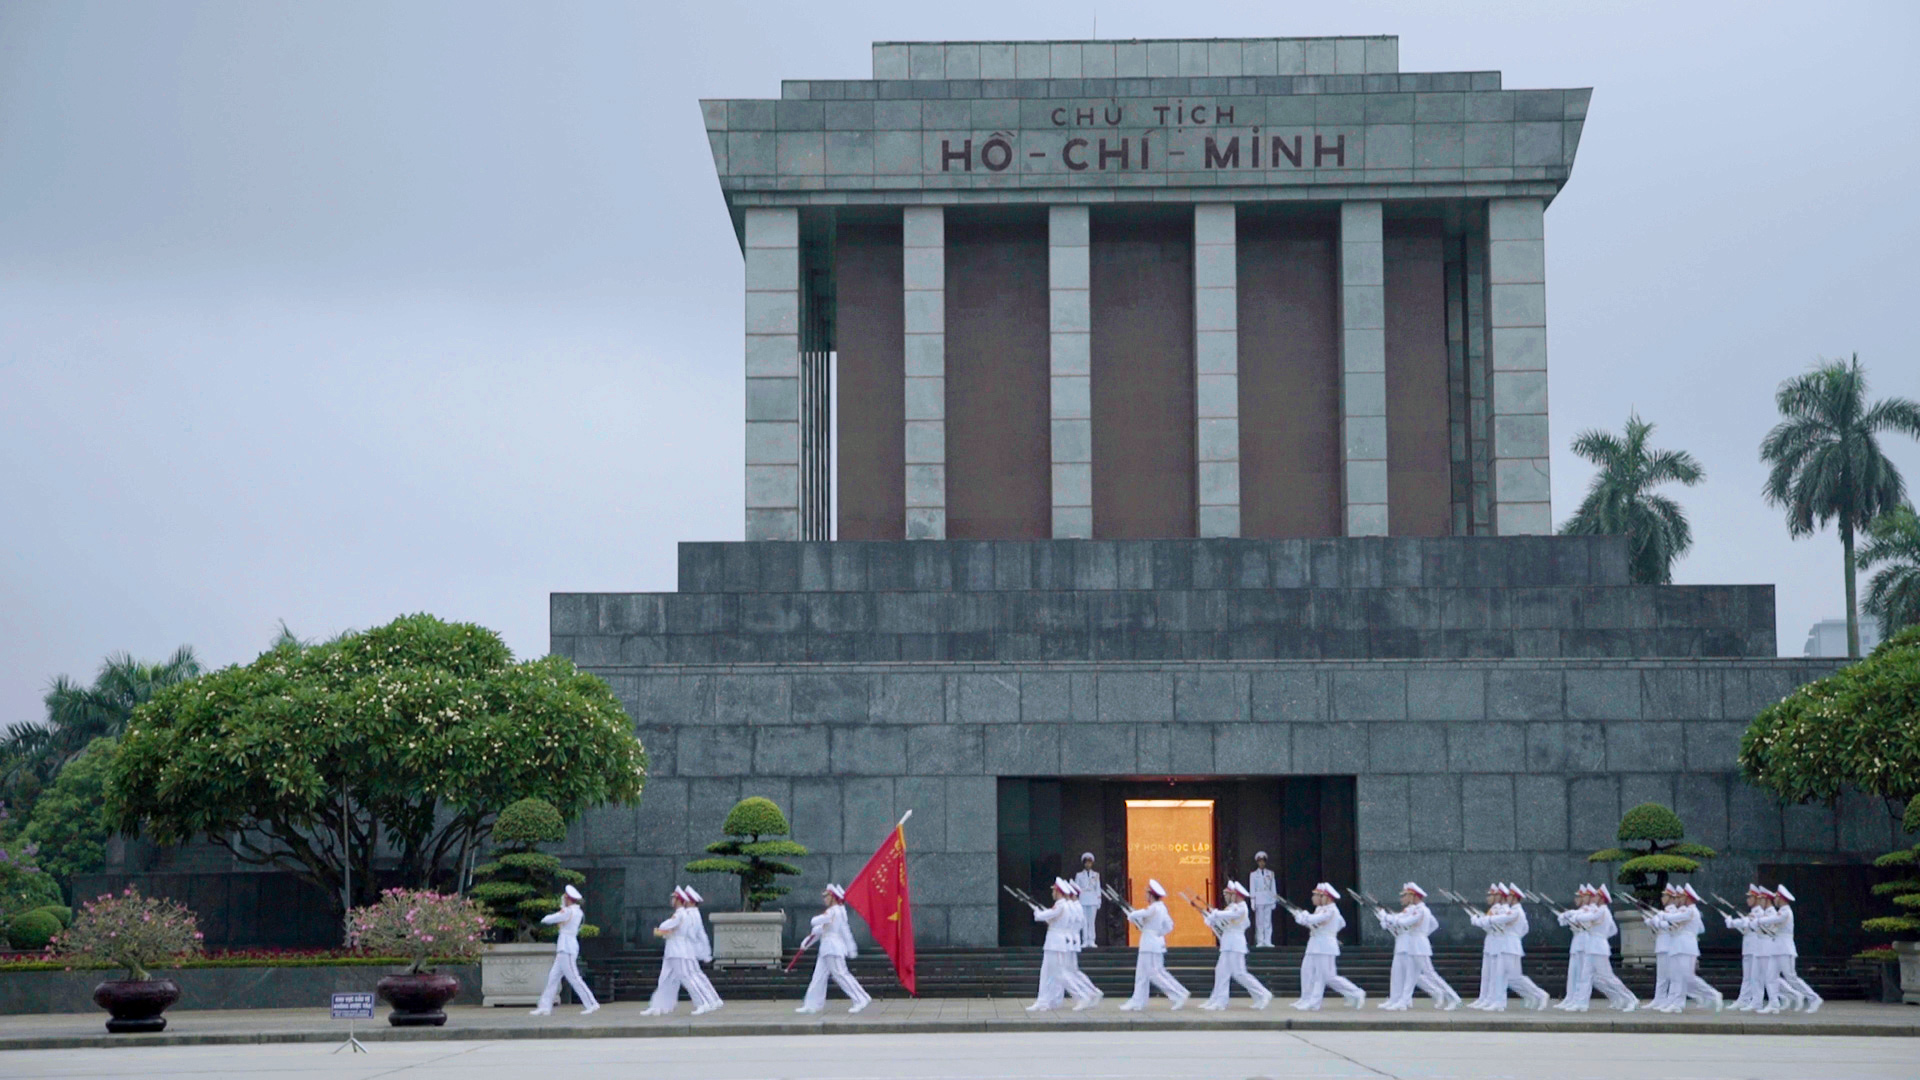 luto Repeler Gobernar Ho Chi Minh Mausoleum: How to visit the sacred site in Vietnam | CNN Travel